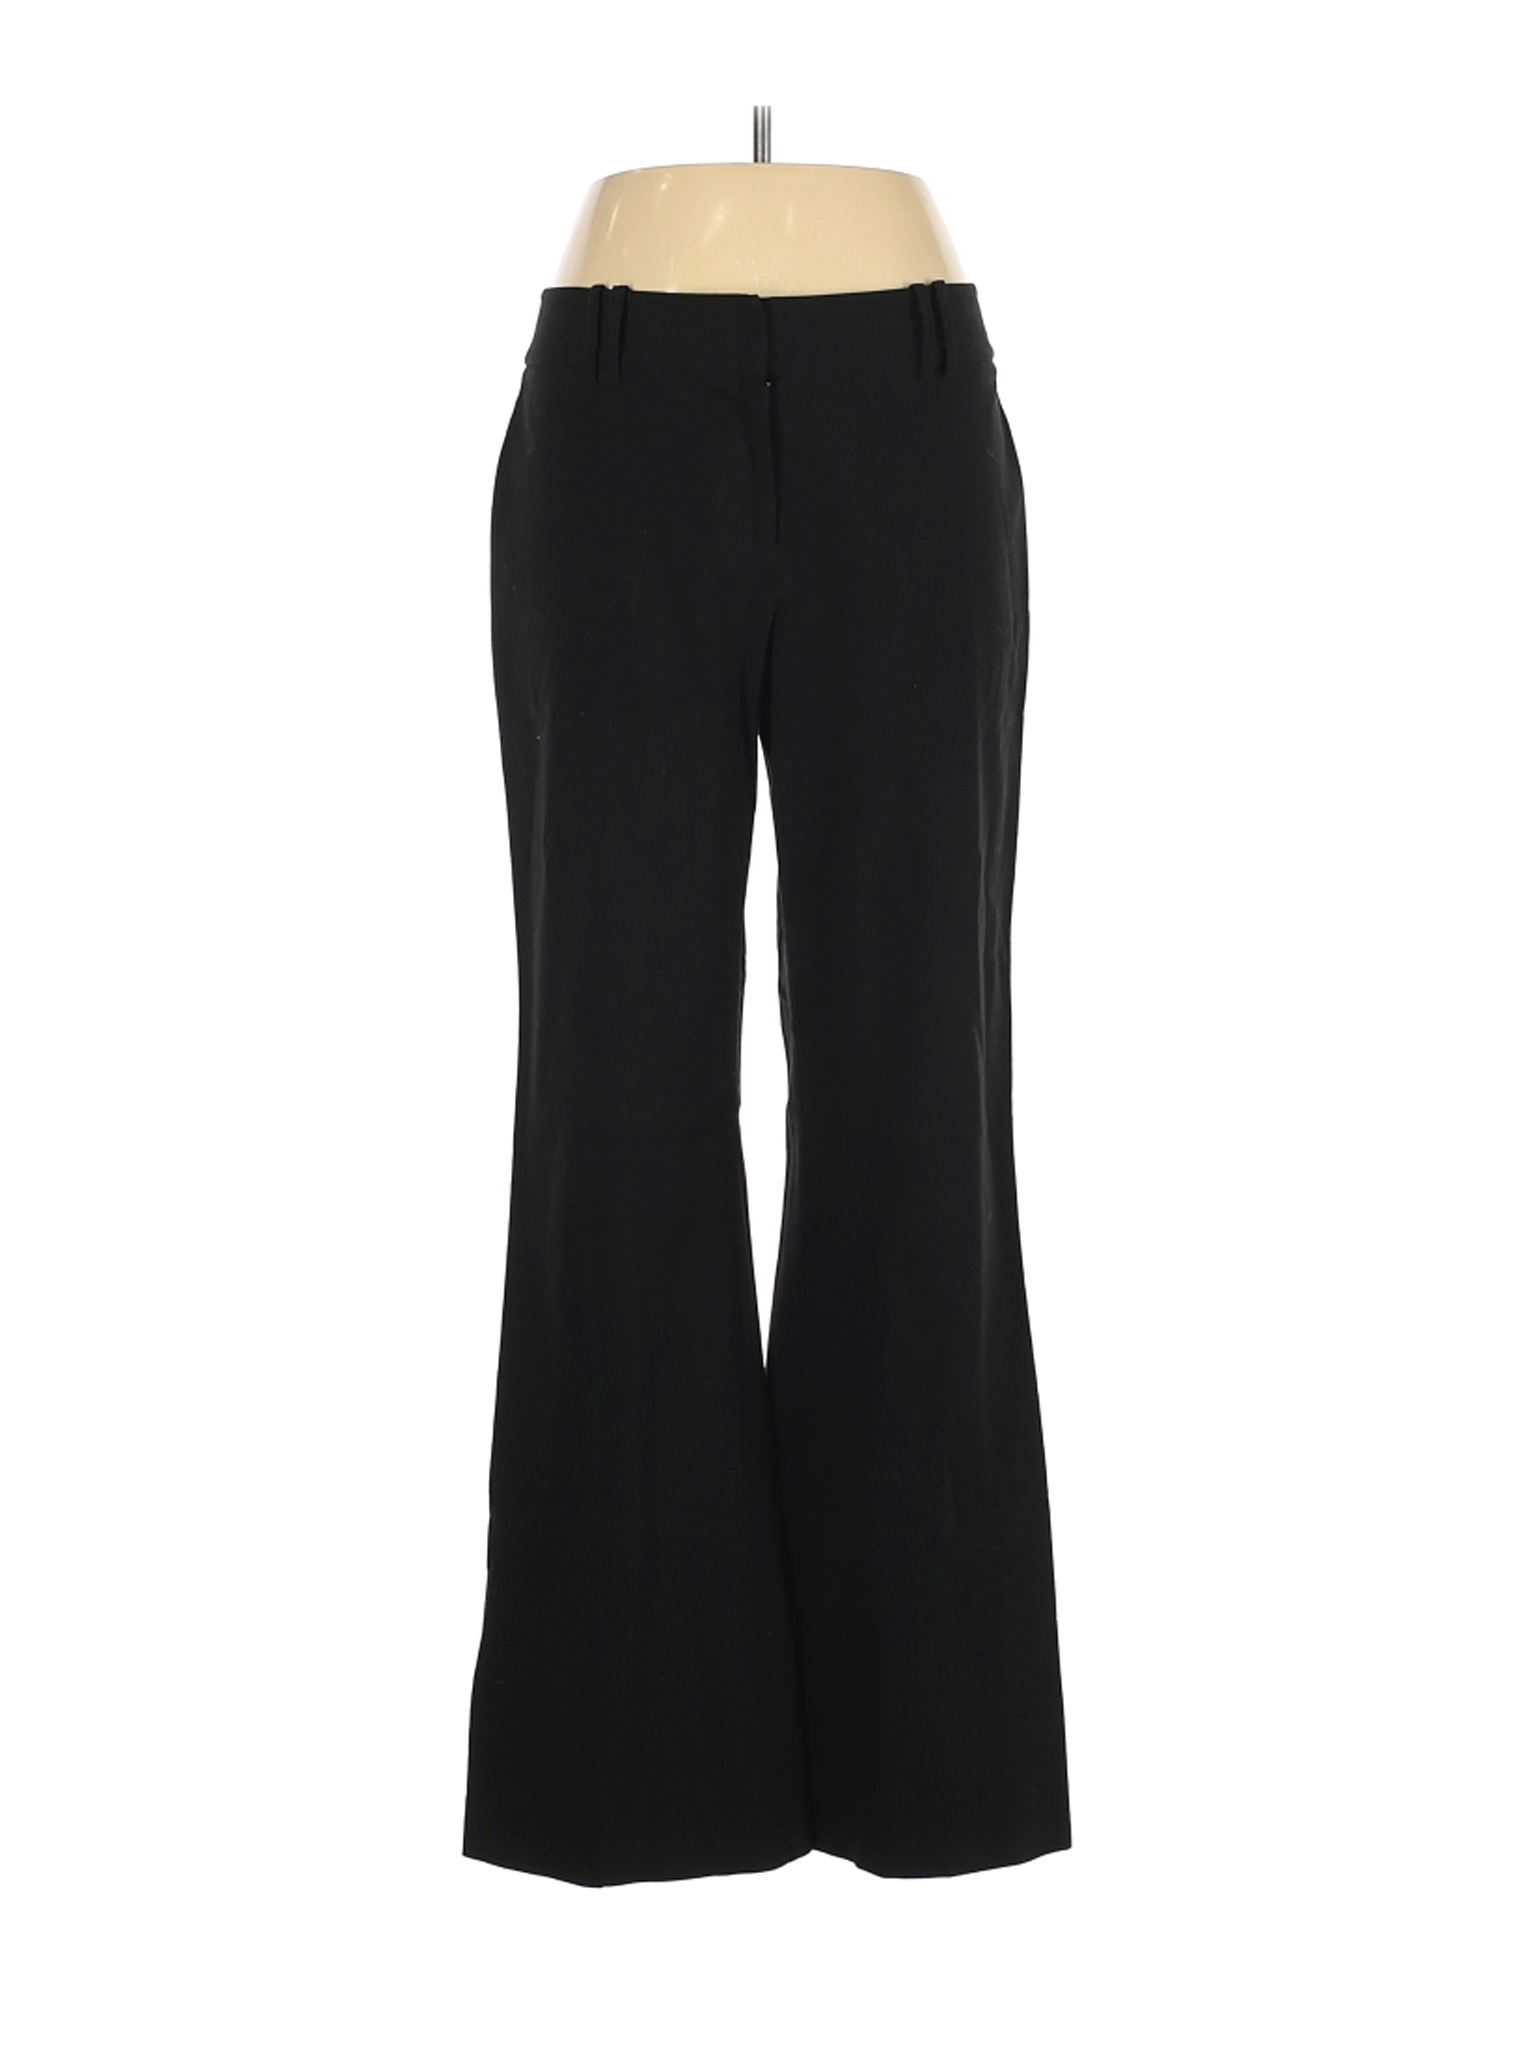 The Limited Women Black Dress Pants 10 | eBay